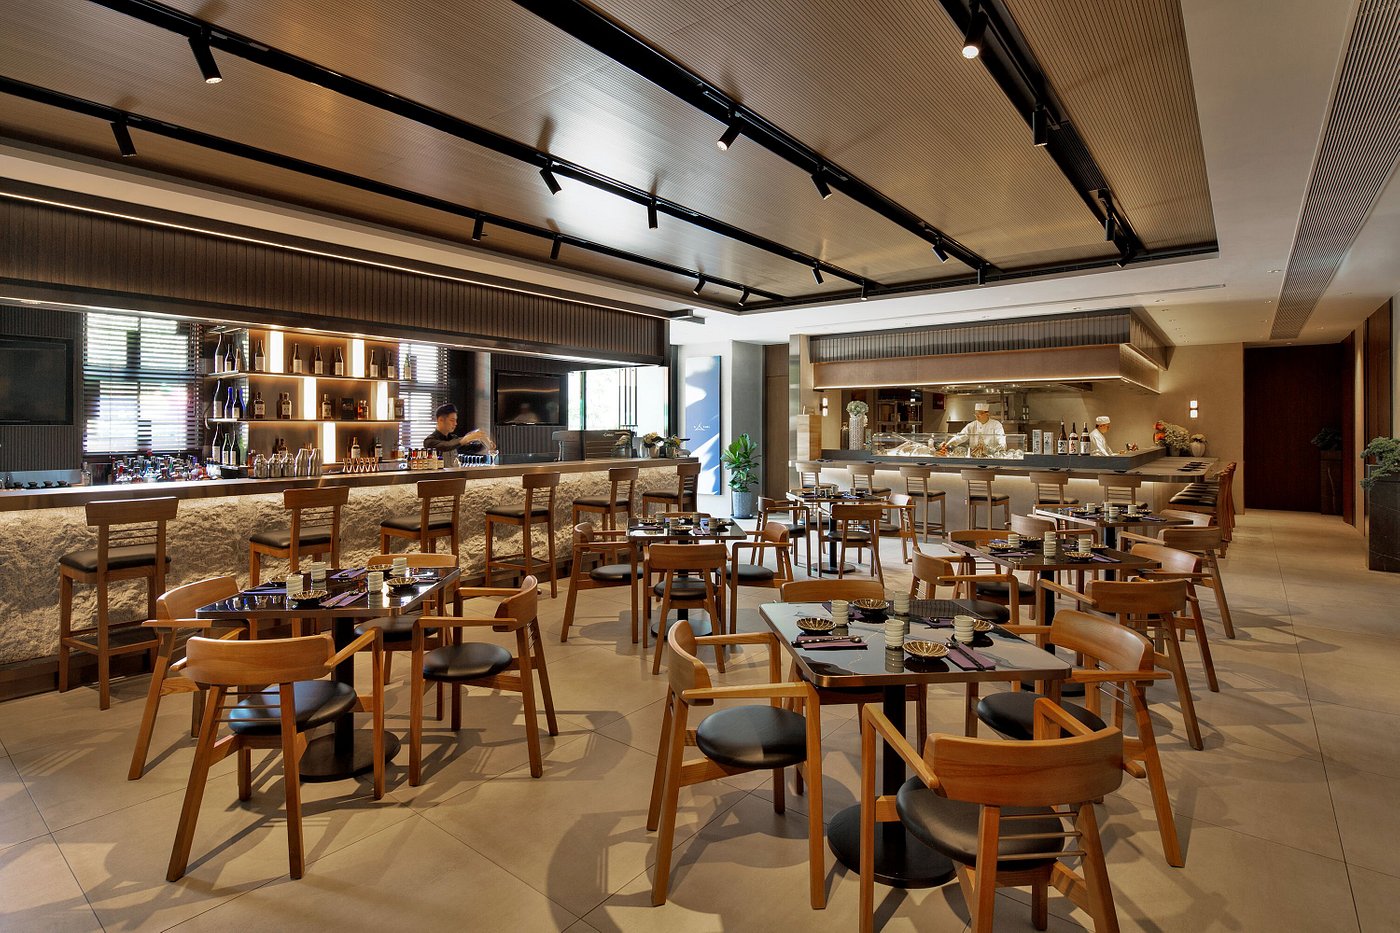 20222+2 cafe美食餐厅,2+2 cafe位于沙田帝都酒店内...【去哪儿攻略】